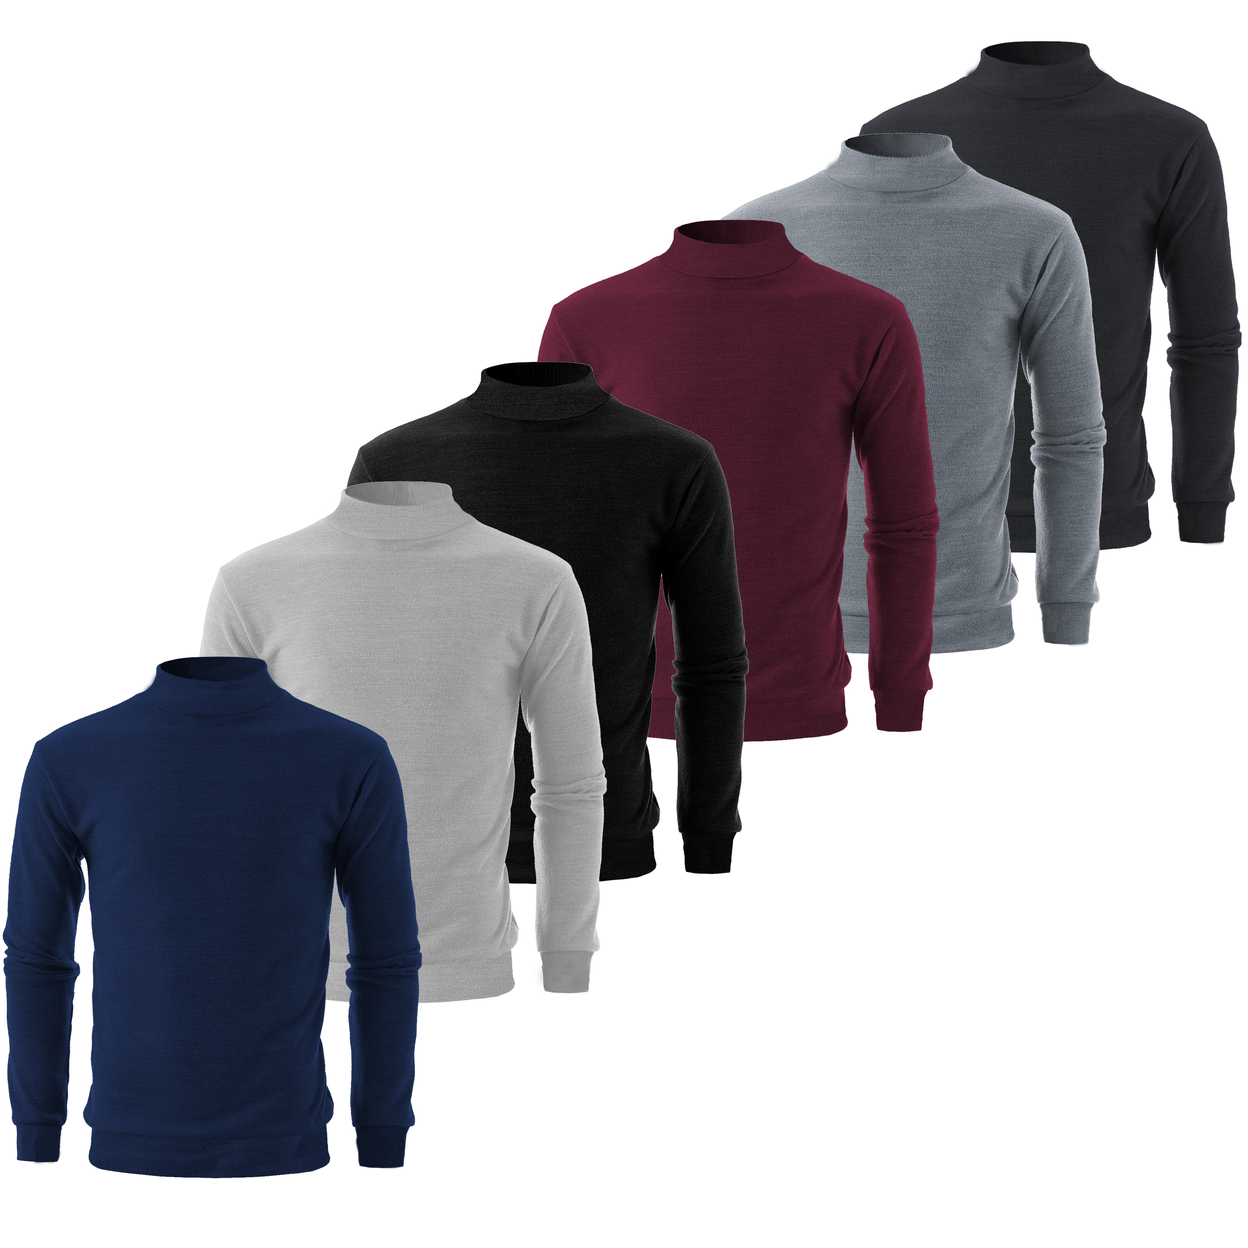 Multi-Pack: Men's Winter Warm Cozy Knit Slim Fit Mock Neck Sweater - 1-pack, Medium